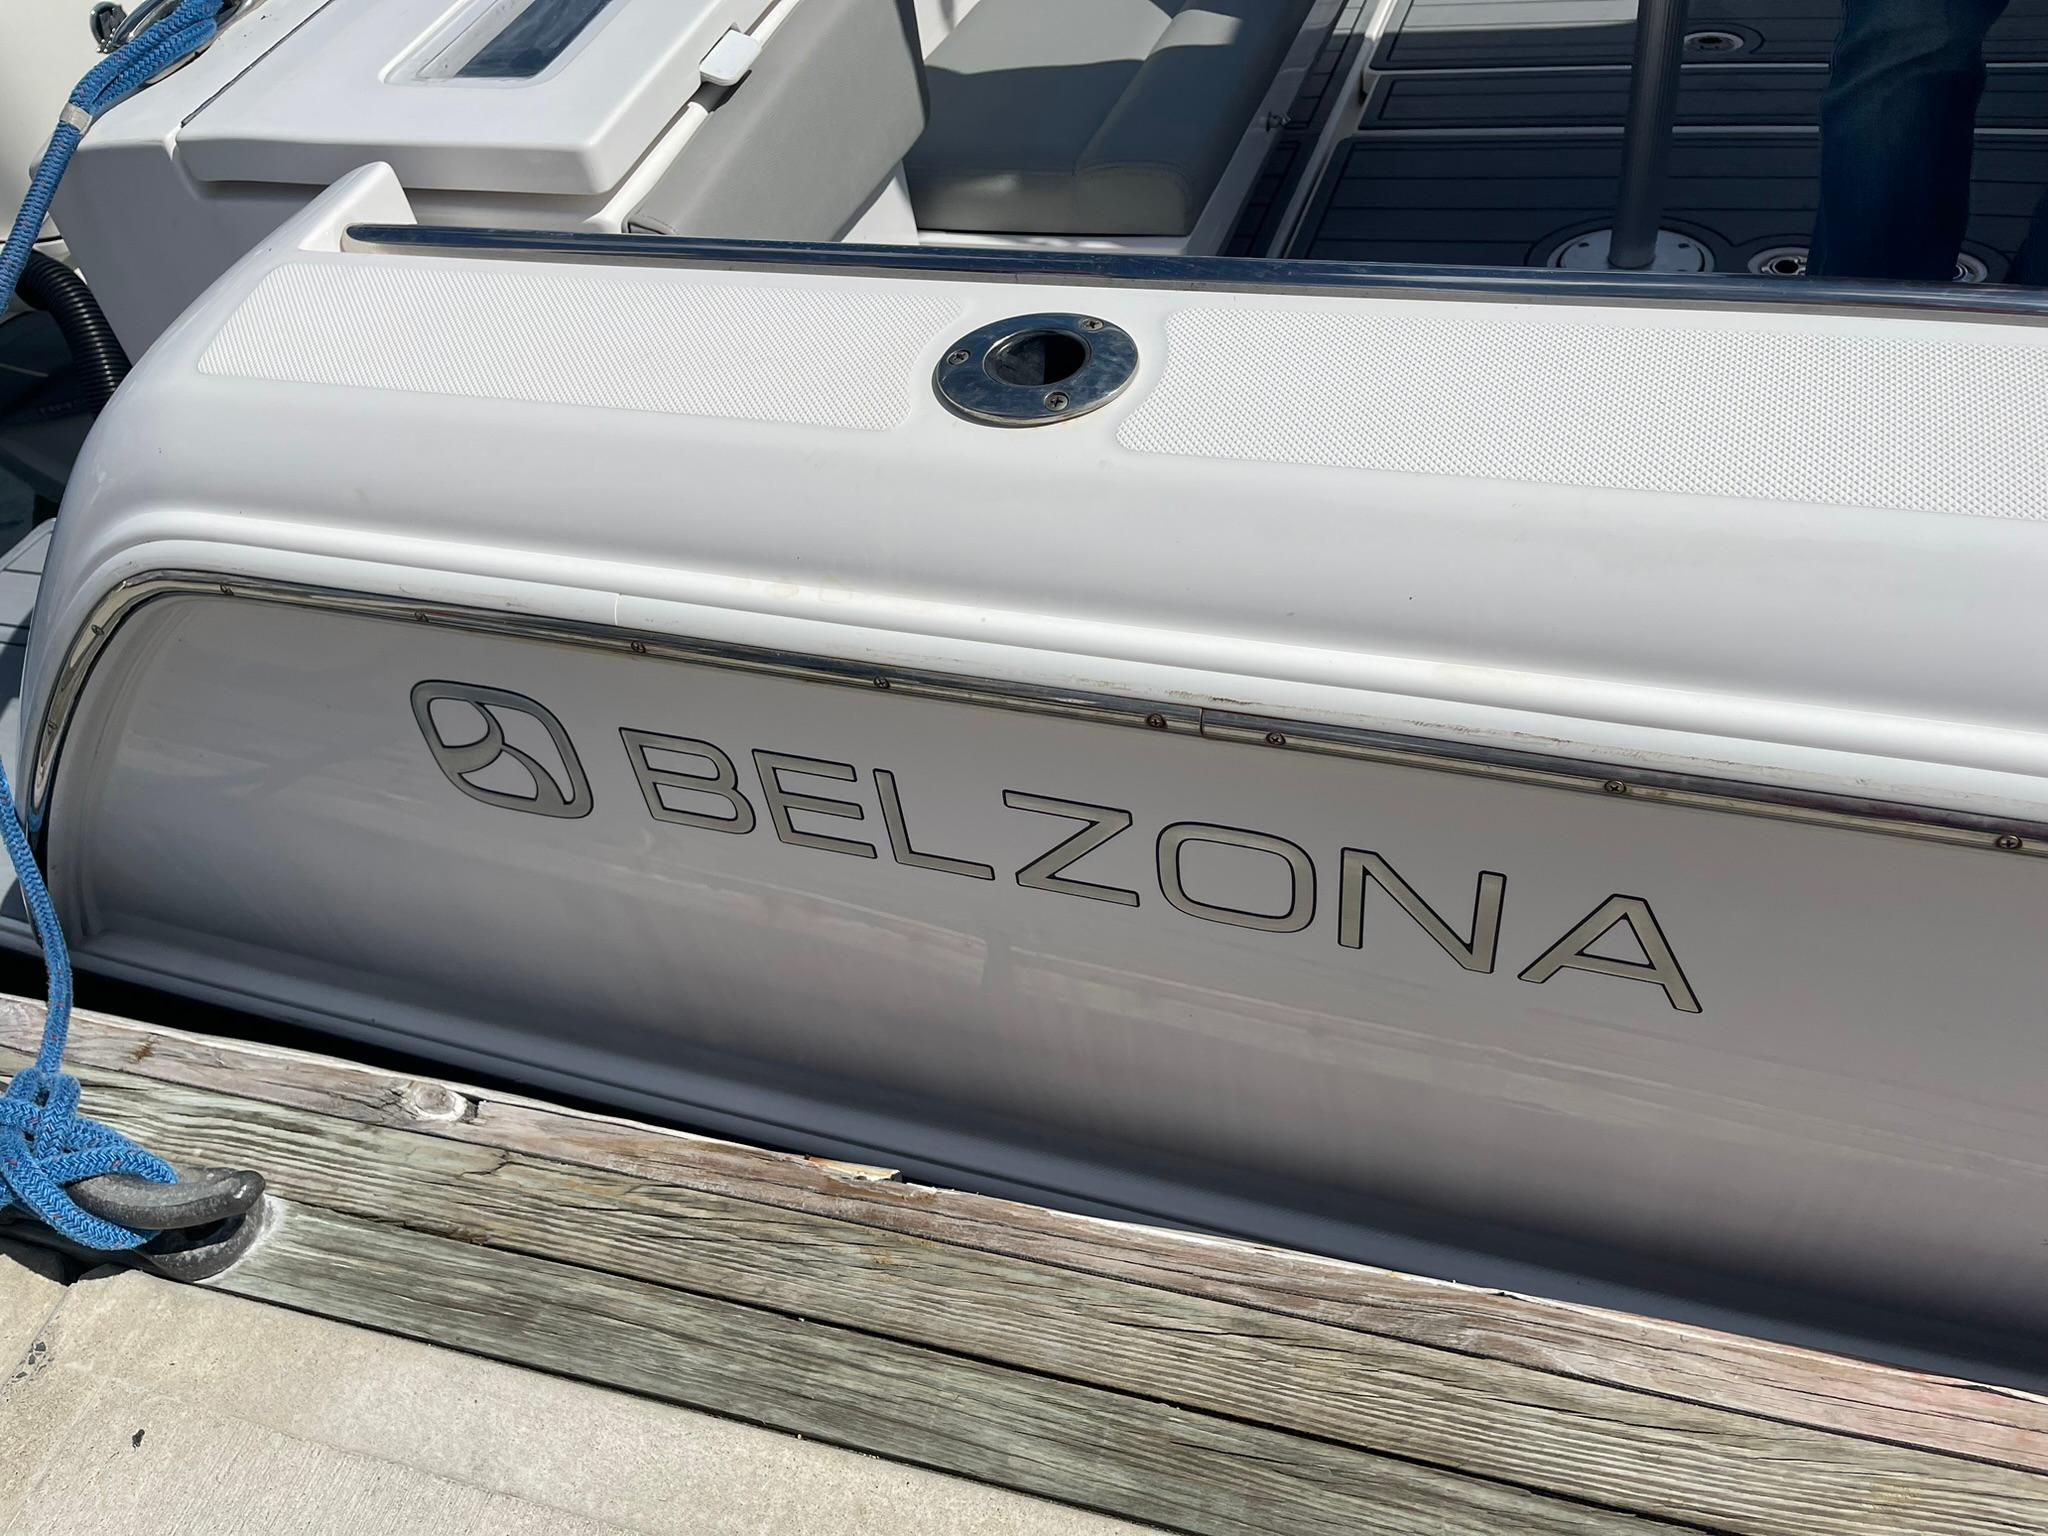 2018 Belzona 325 Center Console